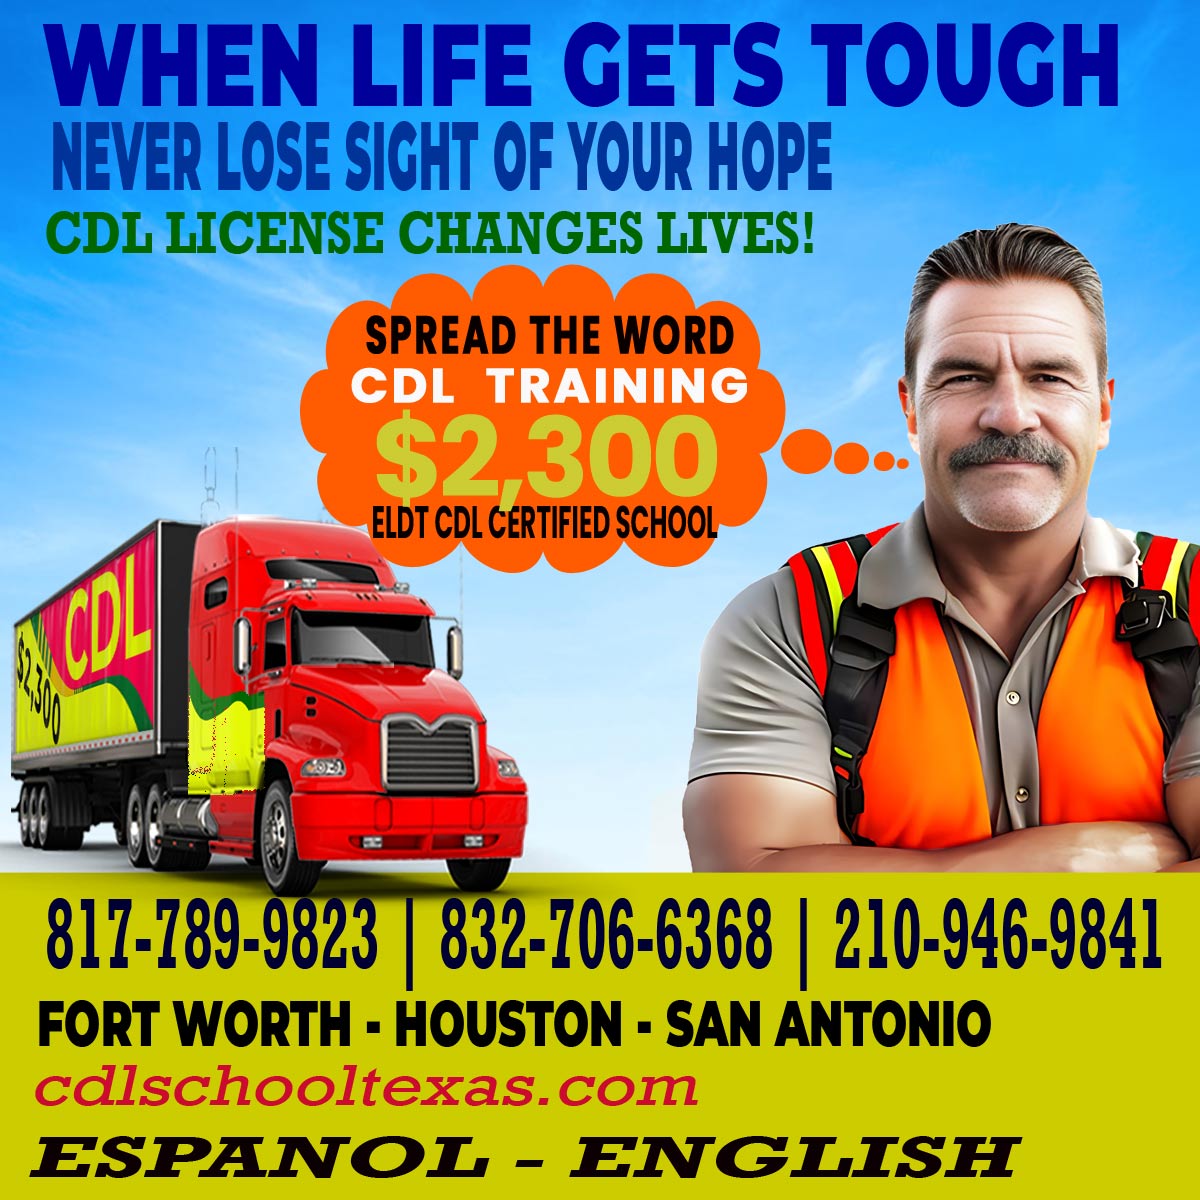 CDL School San Antonio, TX Phones, Motivational Message, Location, URL, training languages